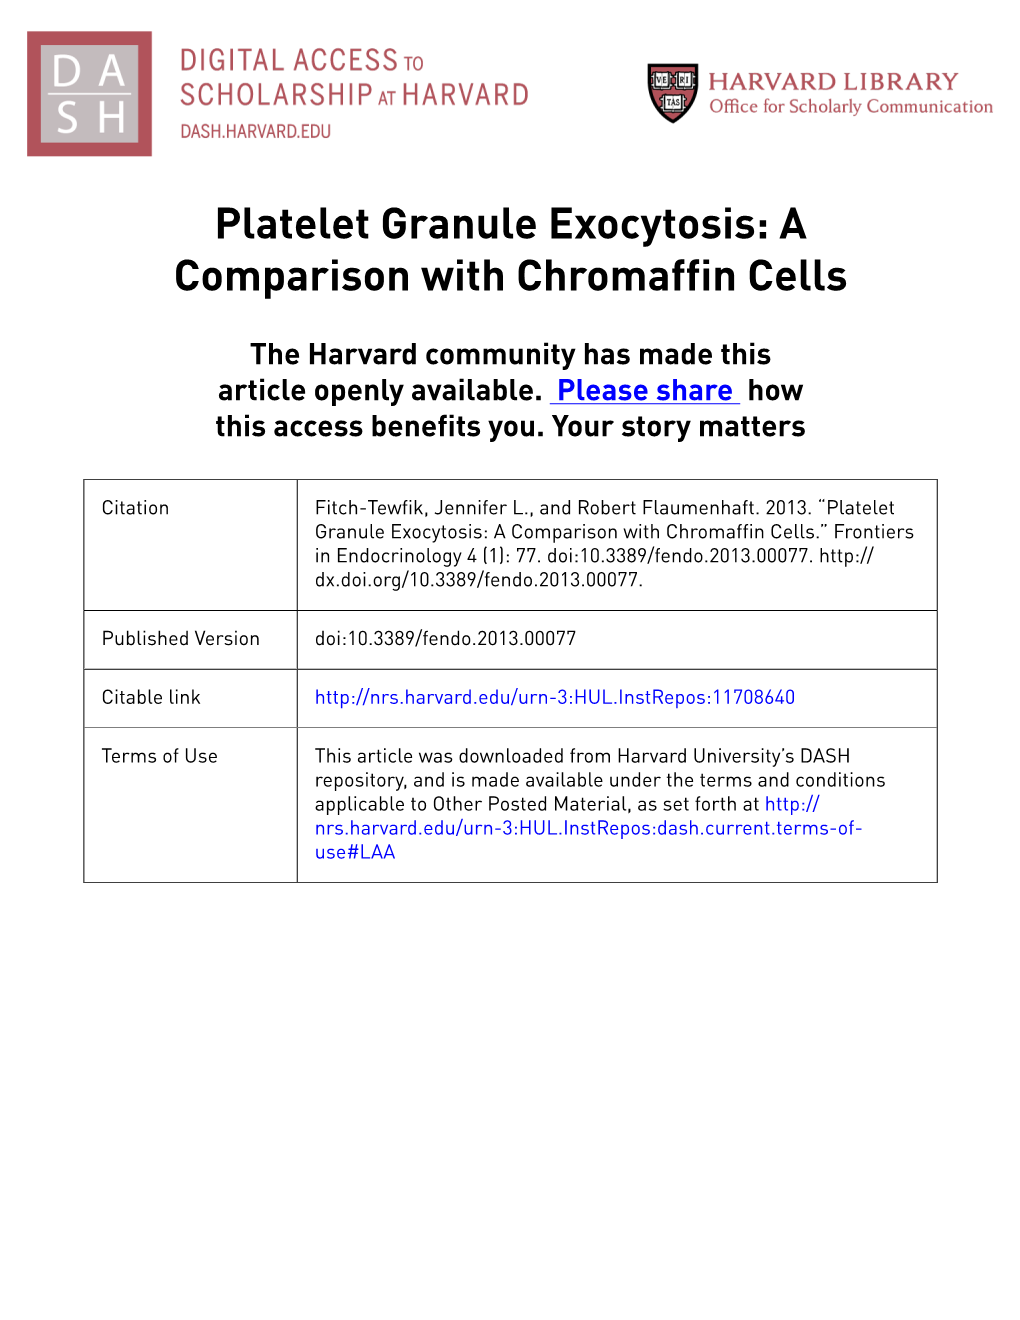 Platelet Granule Exocytosis: a Comparison with Chromaffin Cells